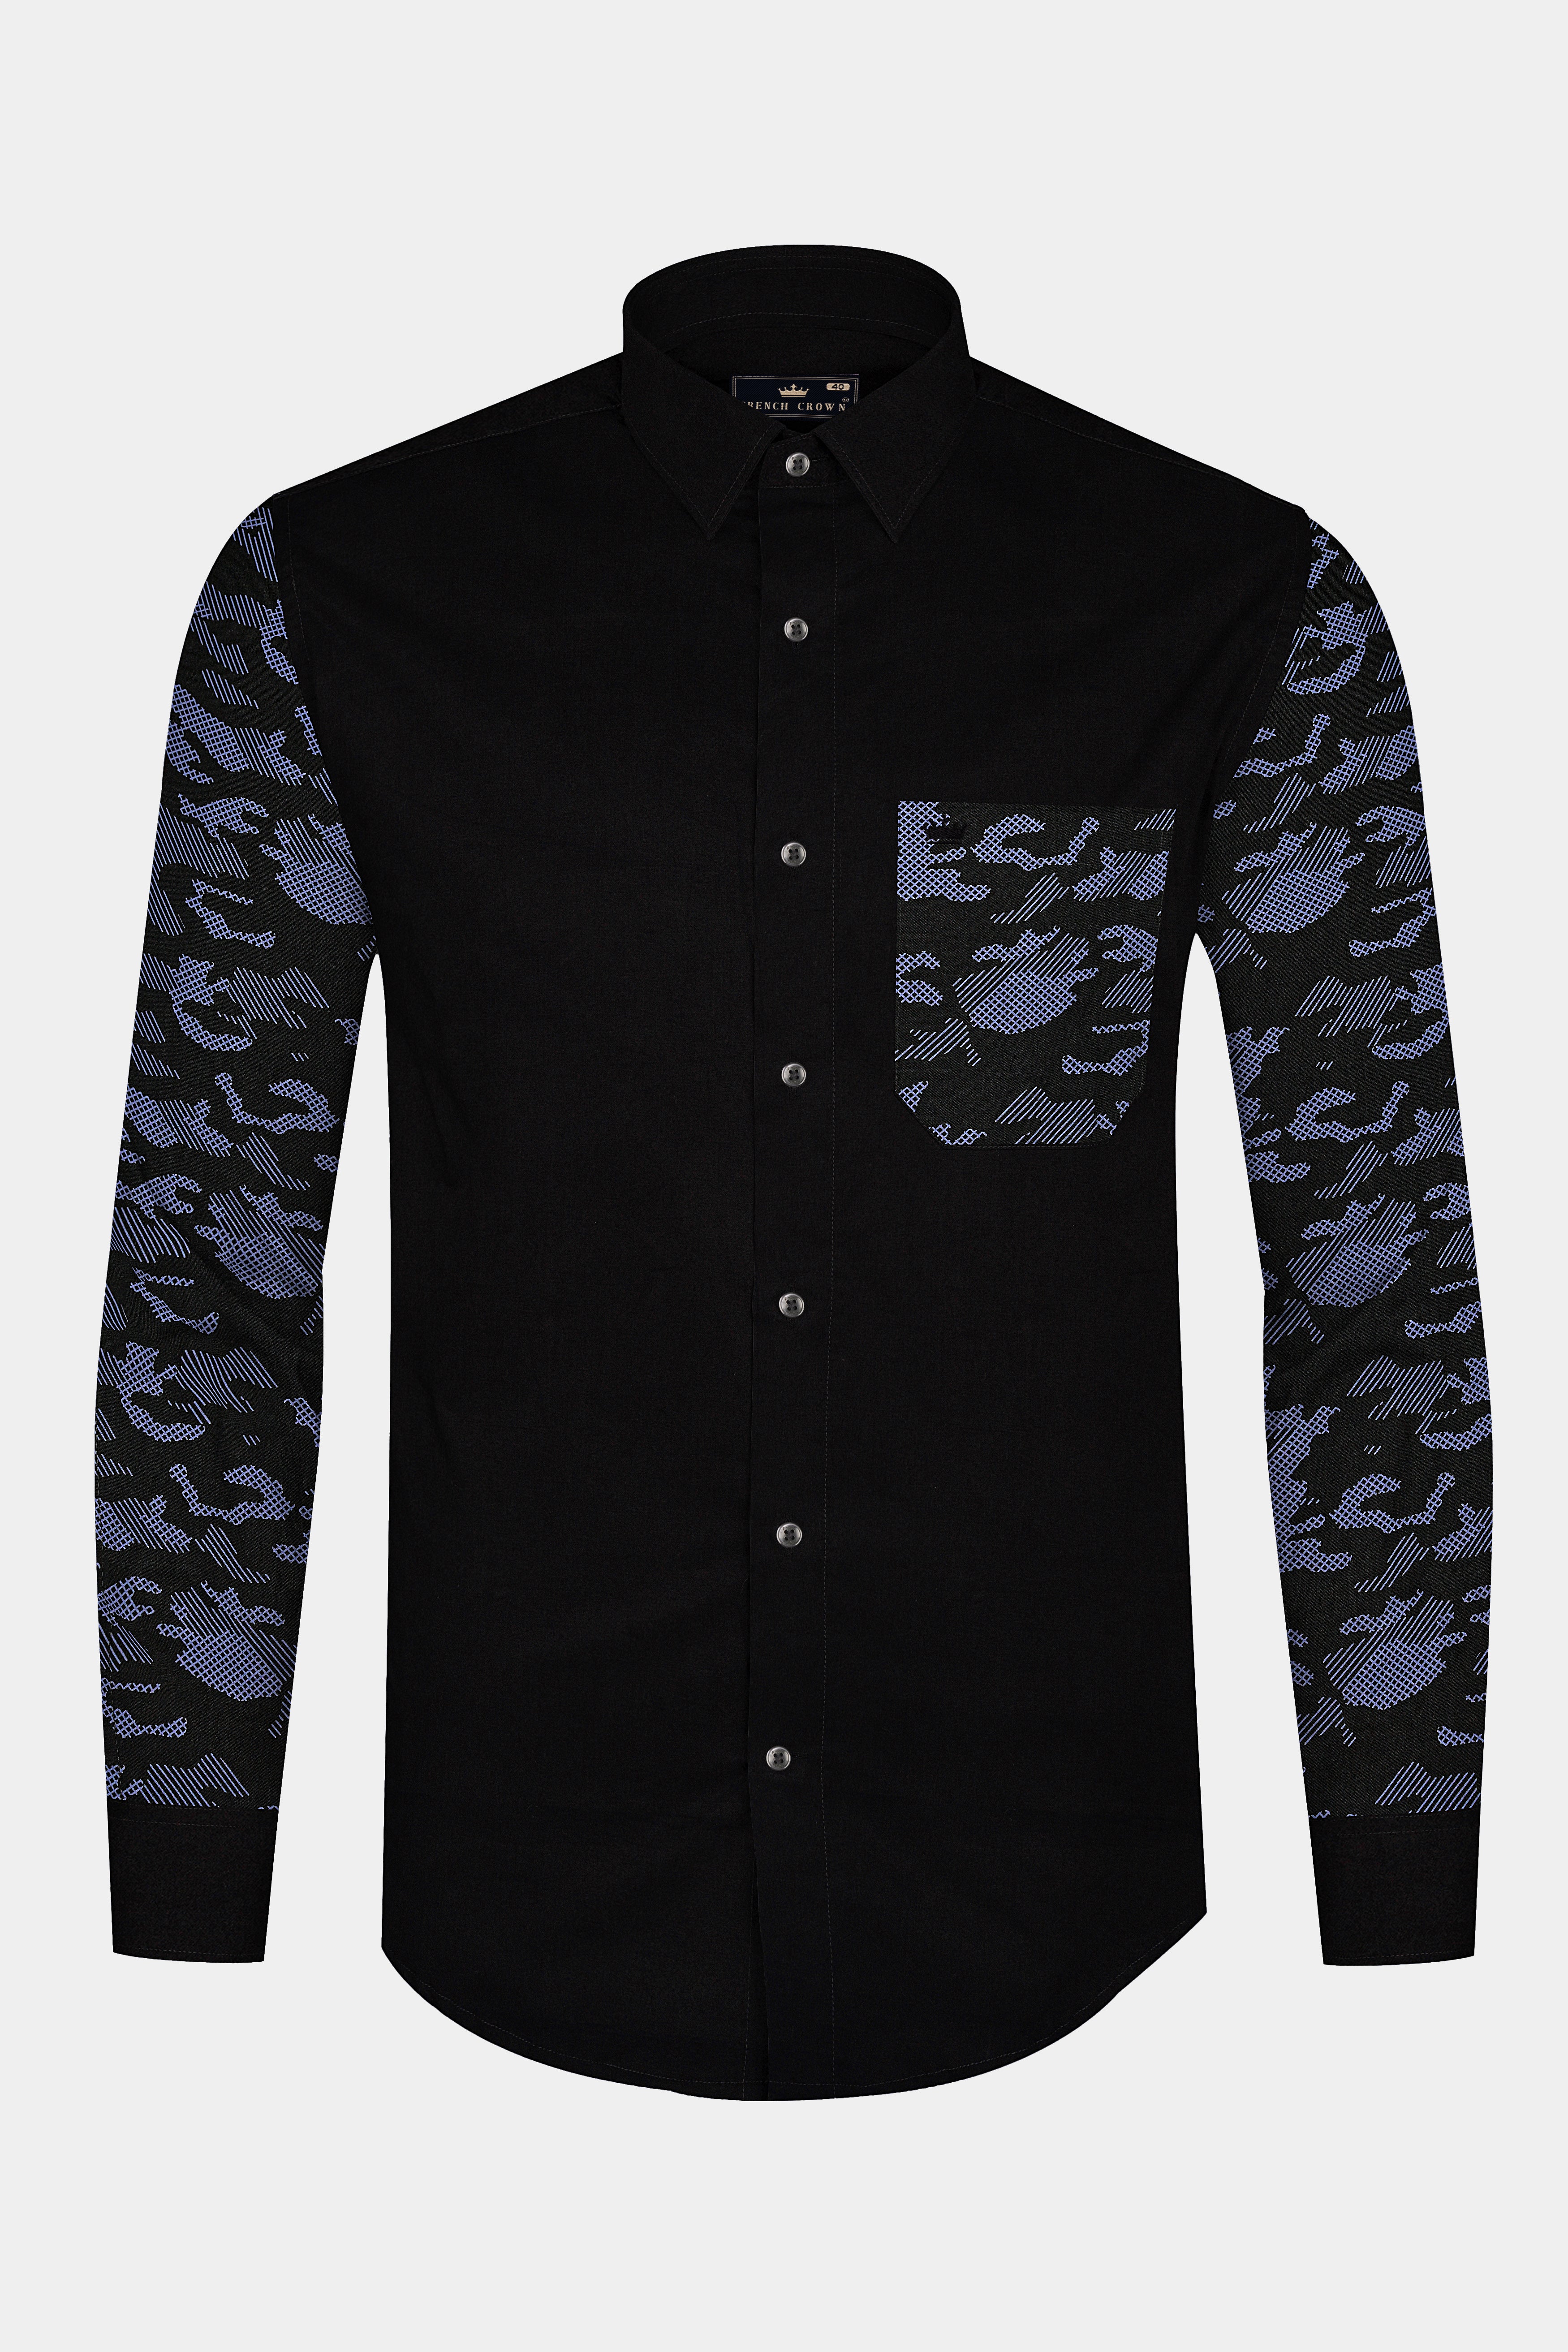 Jade Black with Military Sleeves Printed Super Soft Premium Cotton Designer Shirt